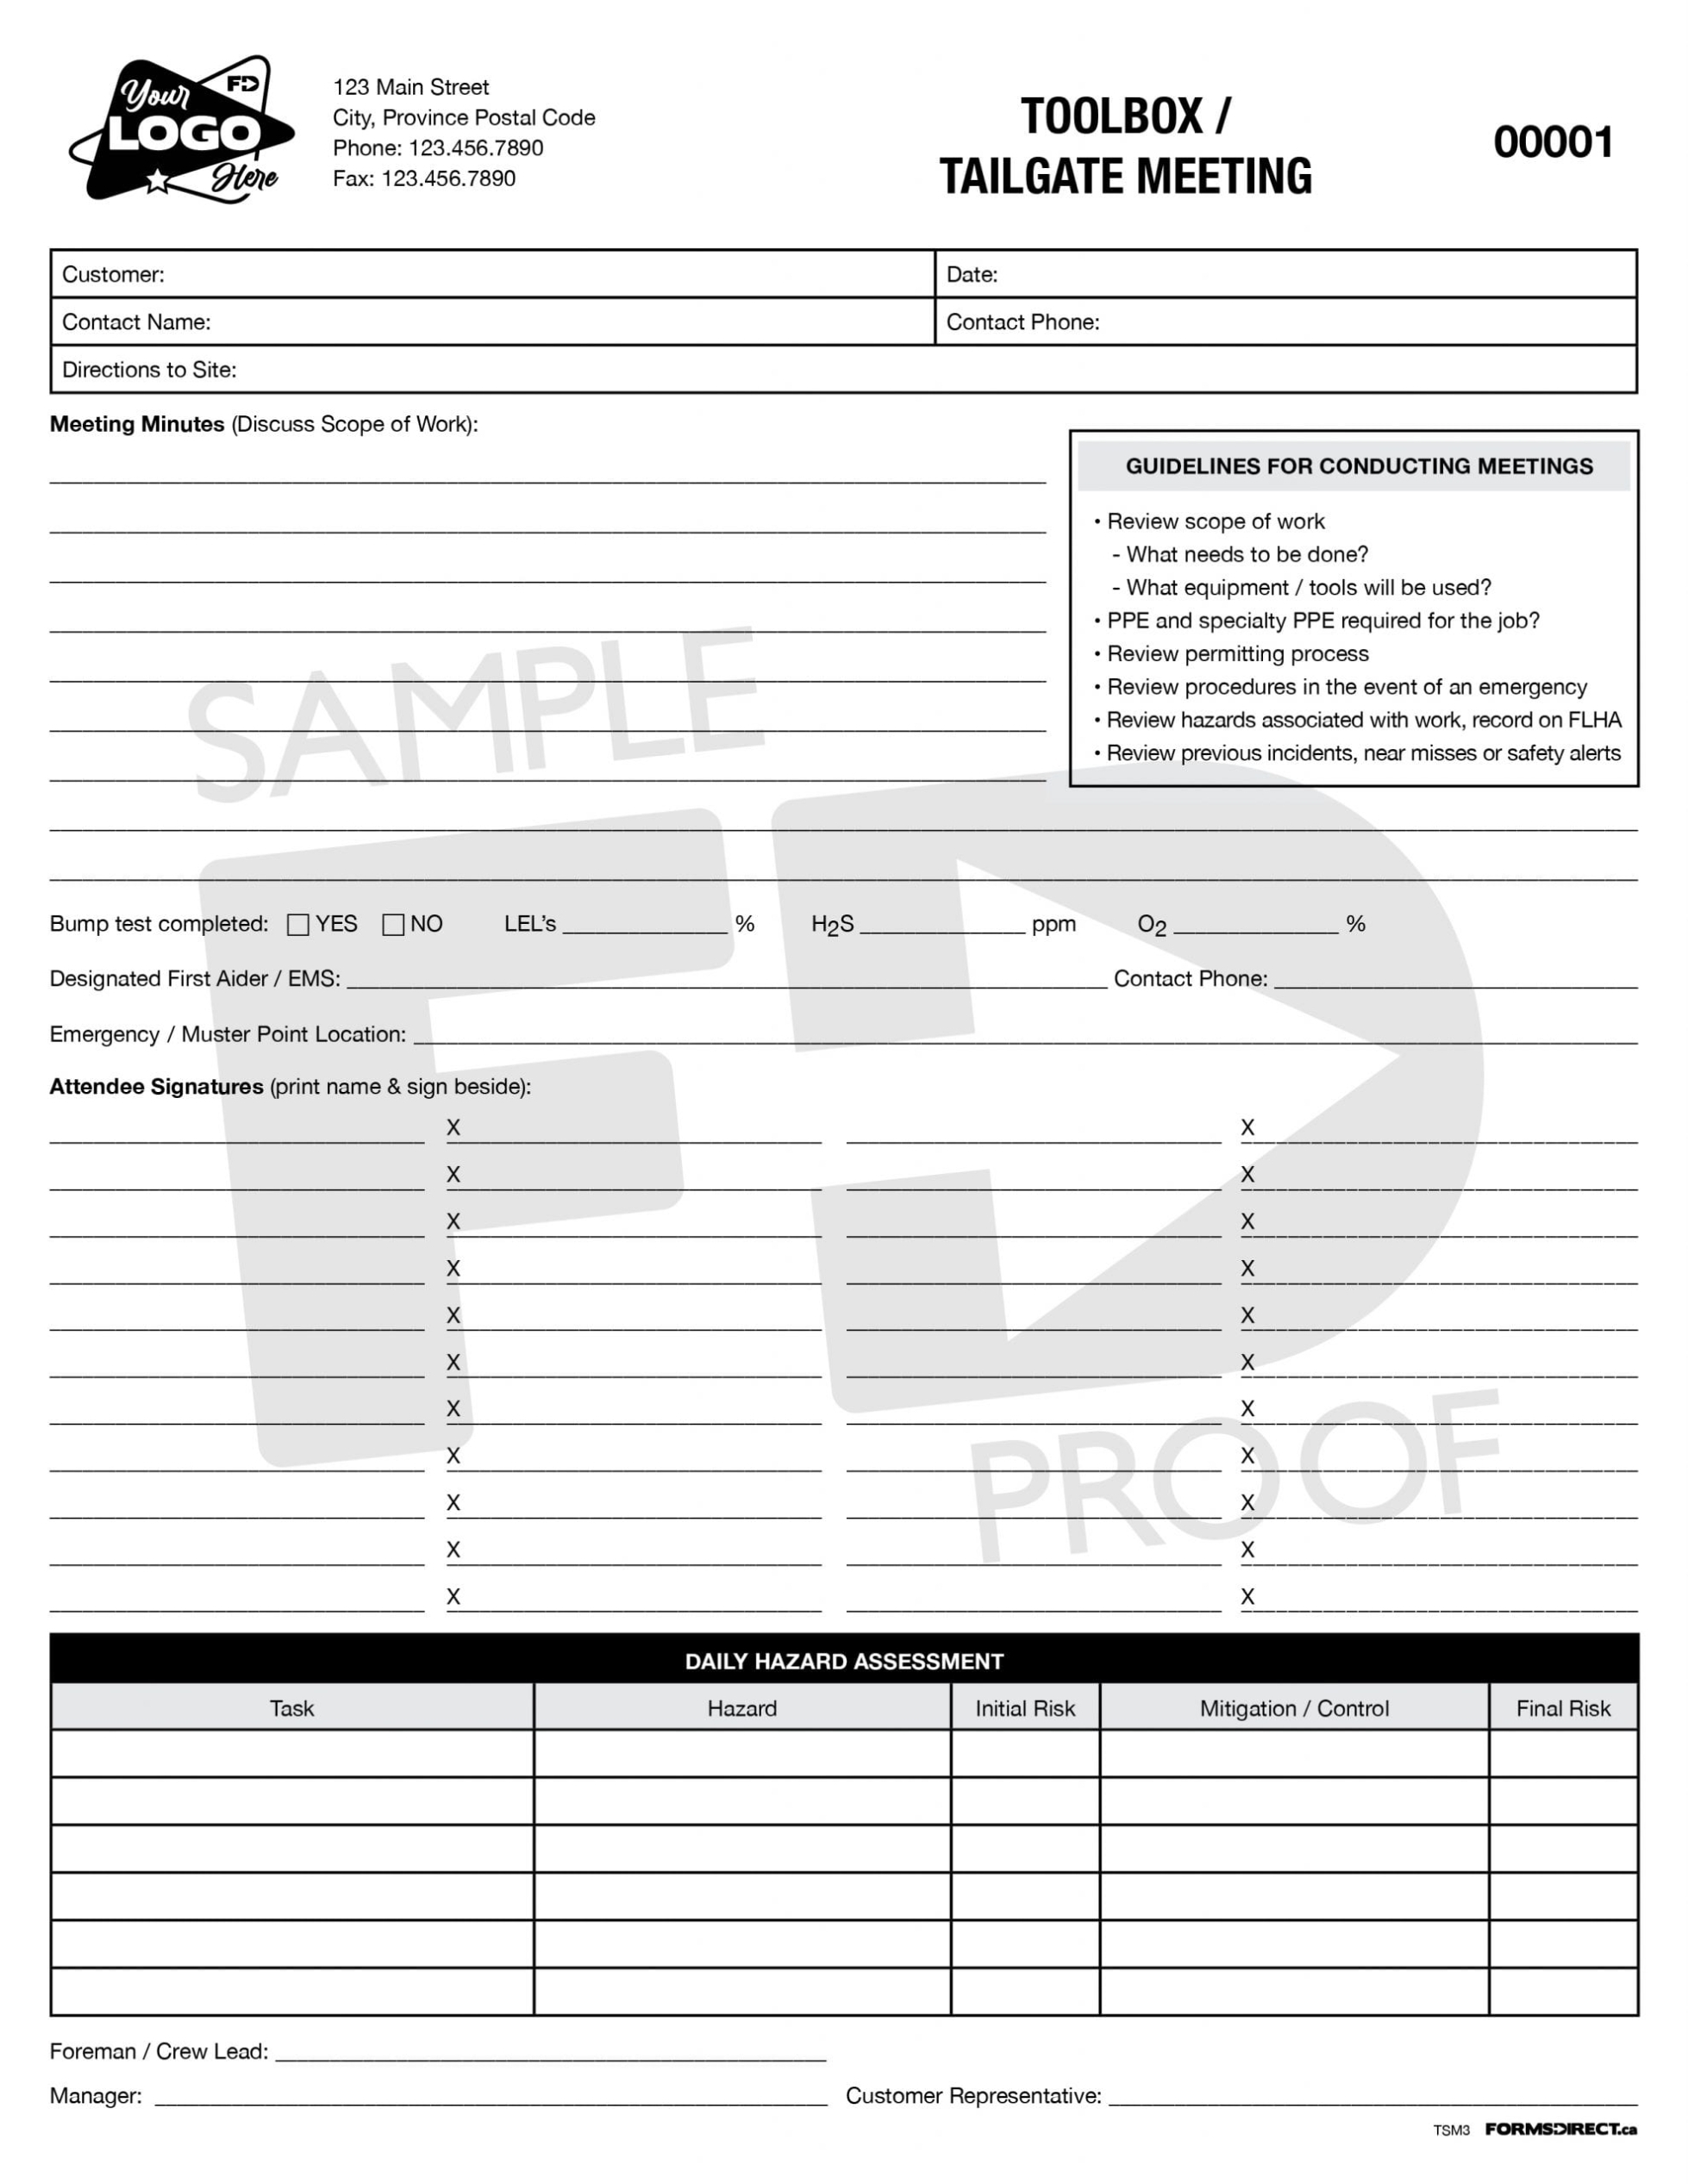 Toolbox / Tailgate Meeting | Tsm3 Custom Form Template - Forms Direct with Toolbox Meeting Template Doc